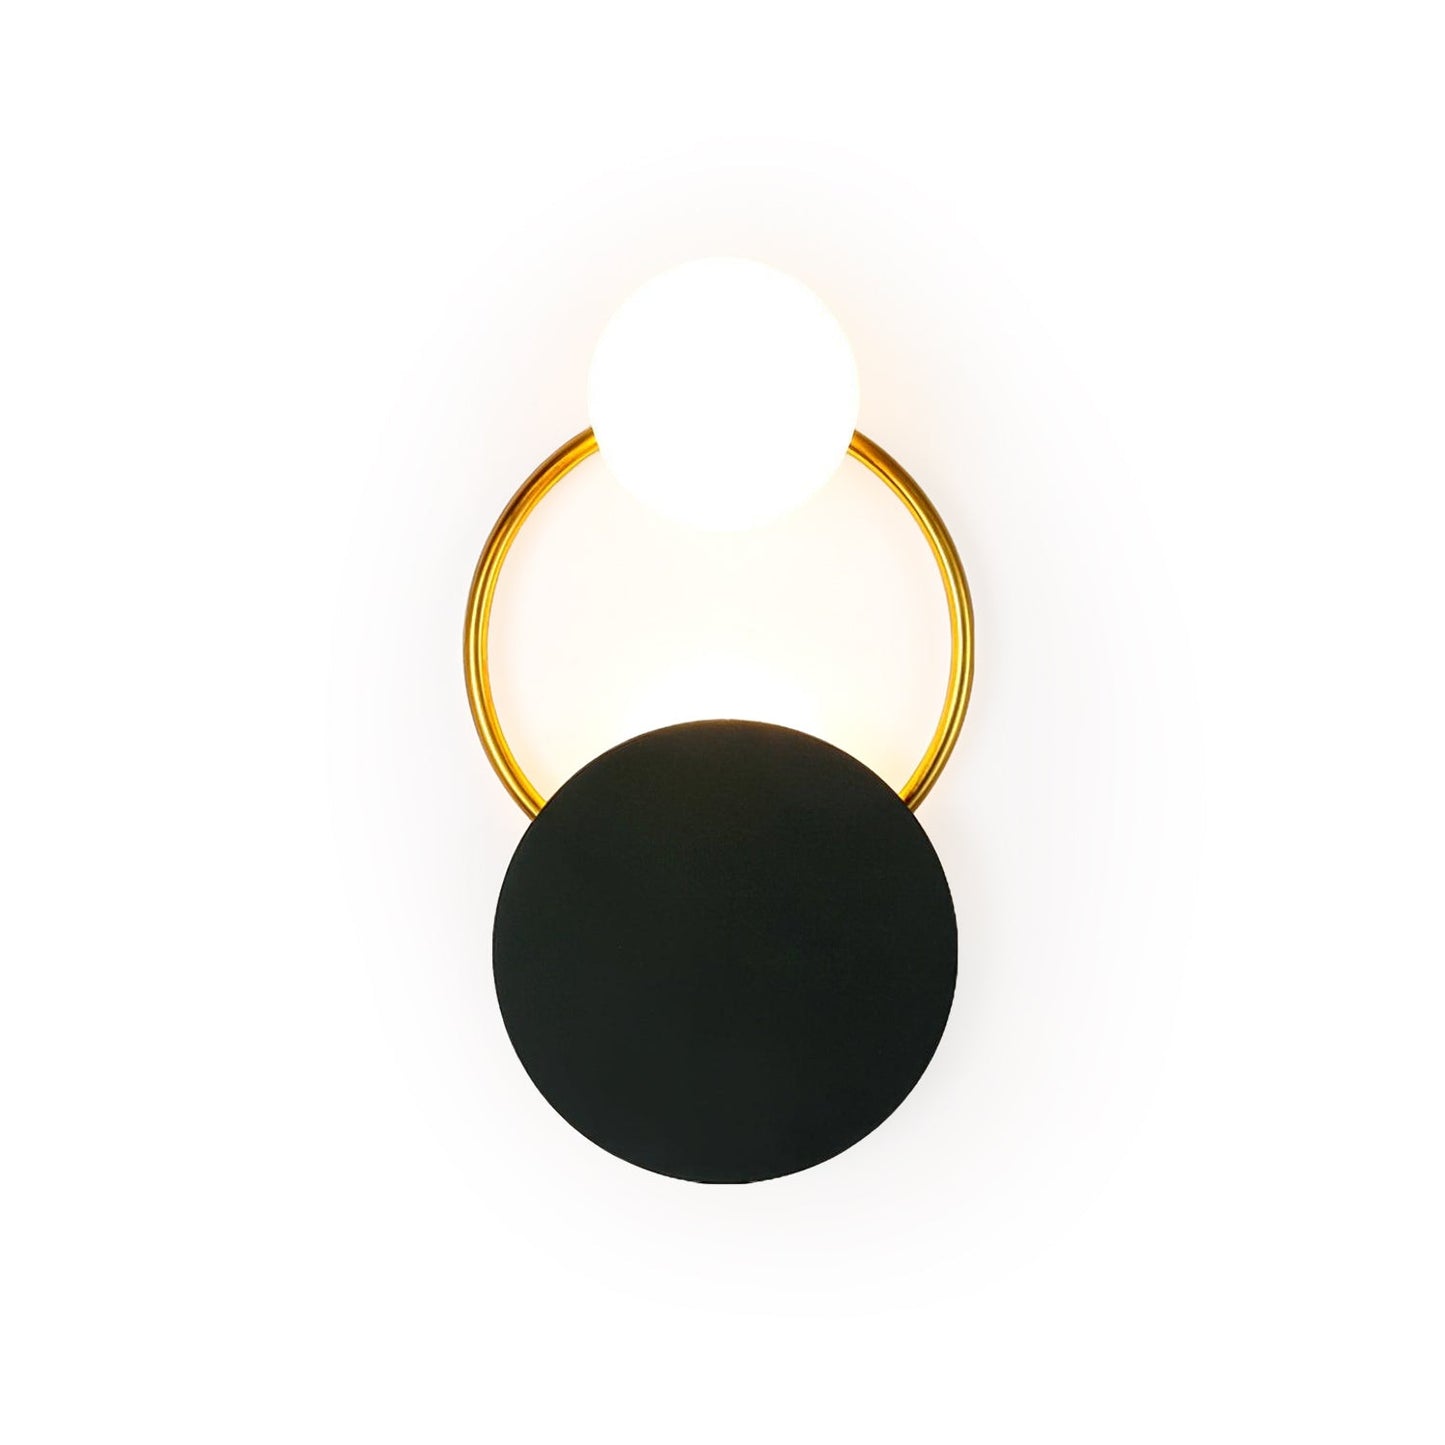 Schwarze Wandlampe mit kreisförmigen Ringen